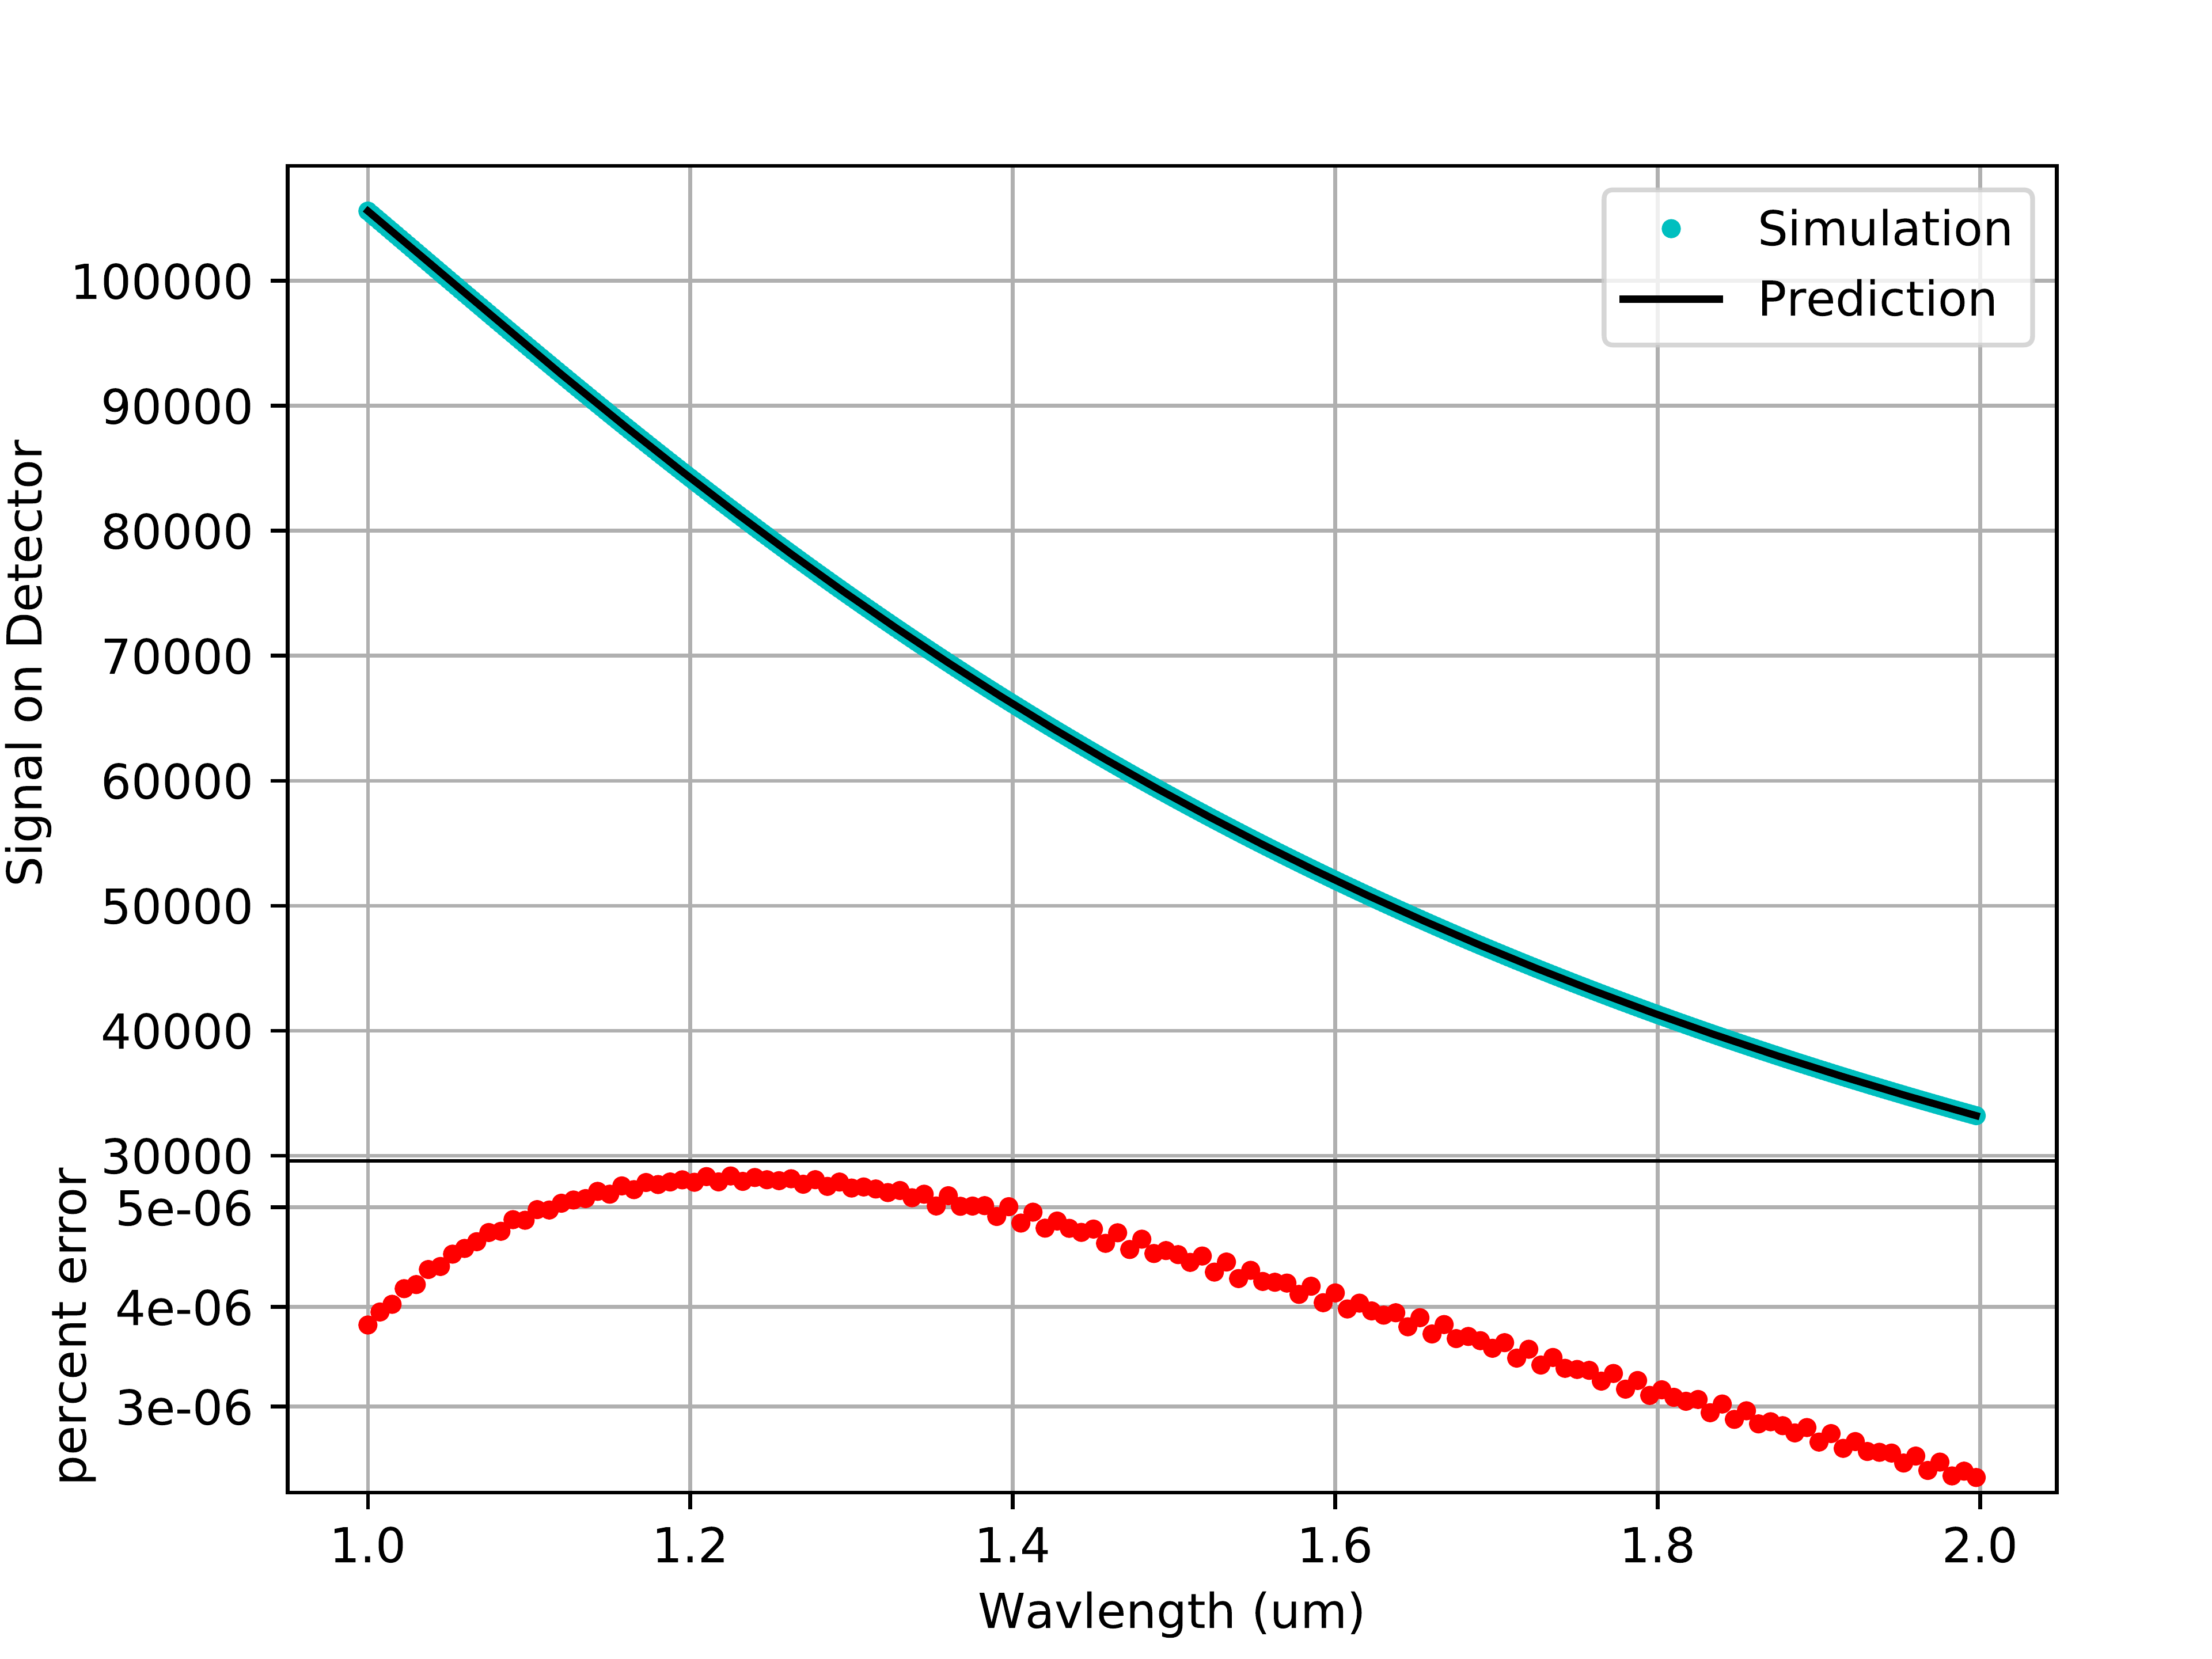 sim-predict-compare-curved-1.png